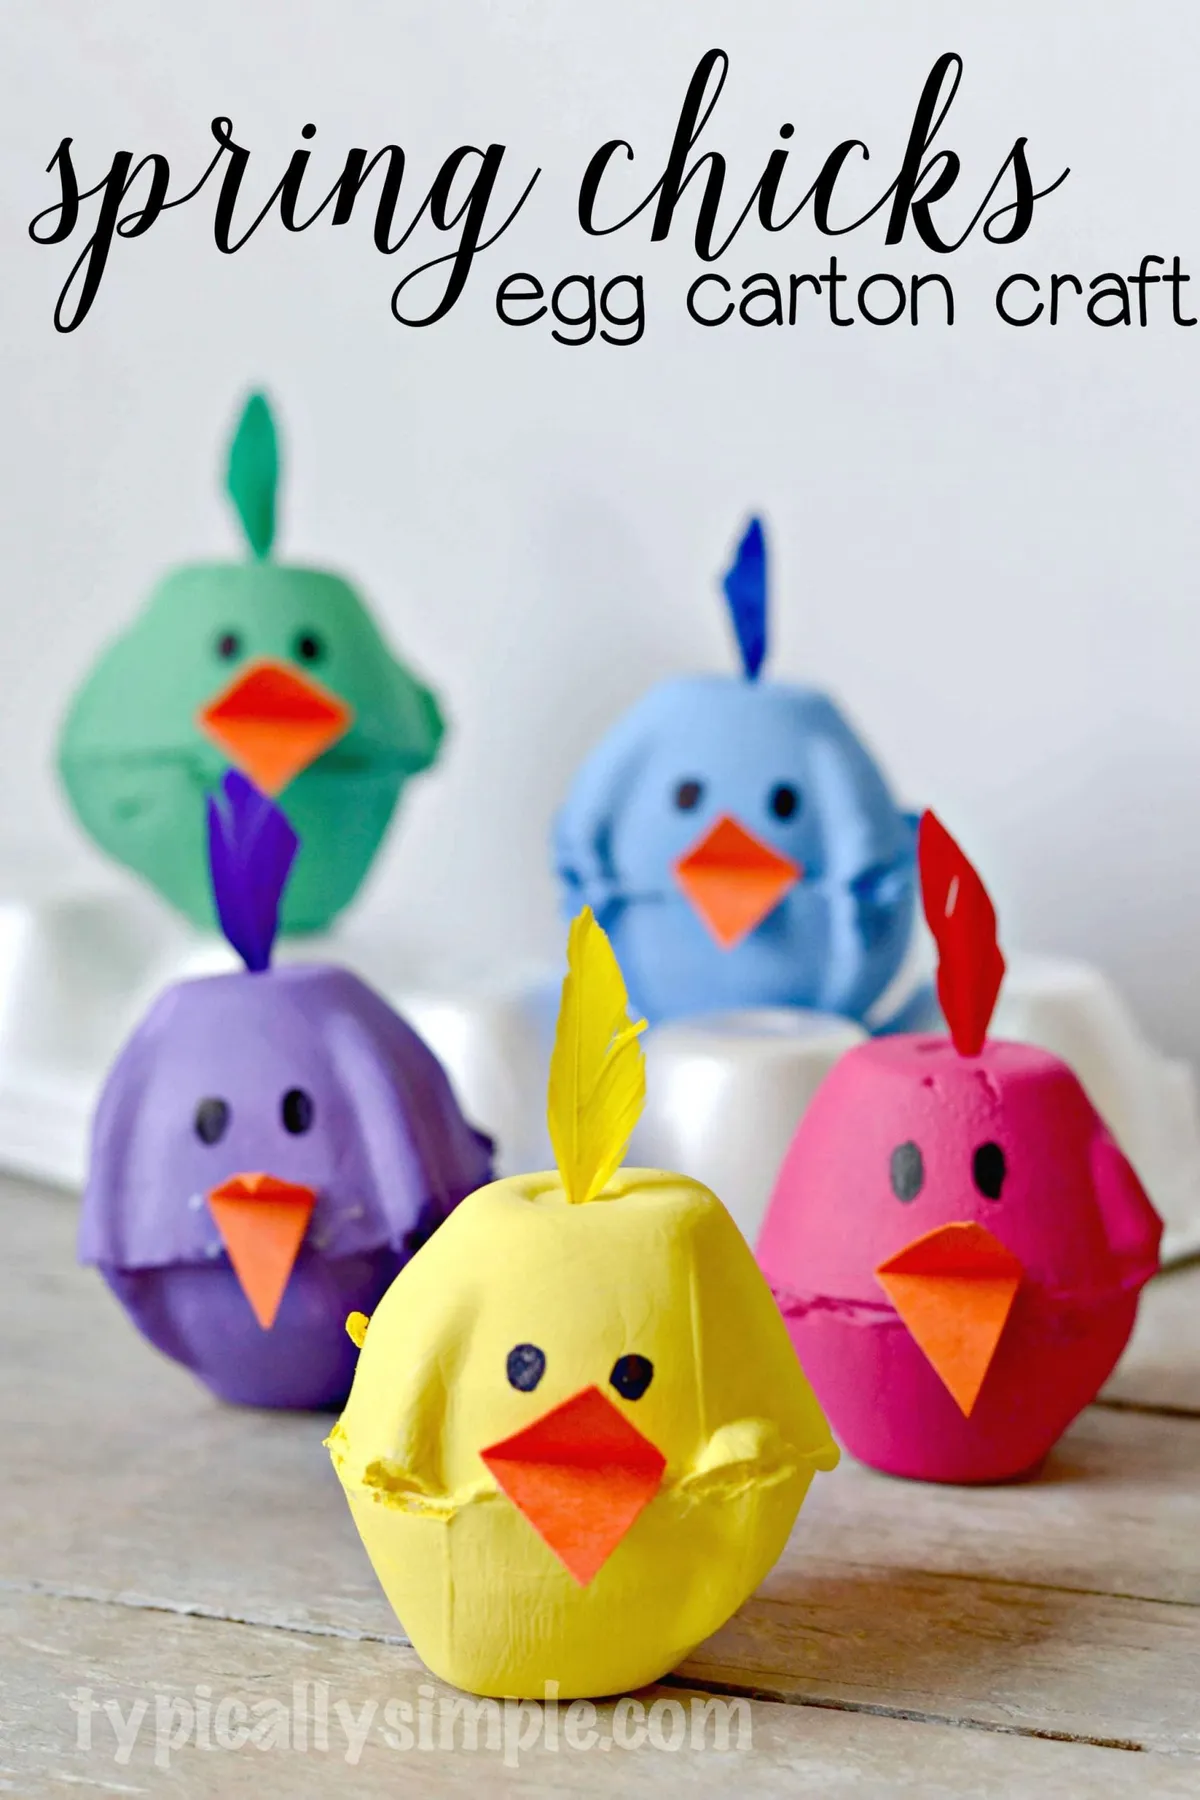 https://c02.purpledshub.com/uploads/sites/51/2020/04/Egg-Carton-Easter-Craft-Ideas-830350c-scaled.jpg?webp=1&w=1200